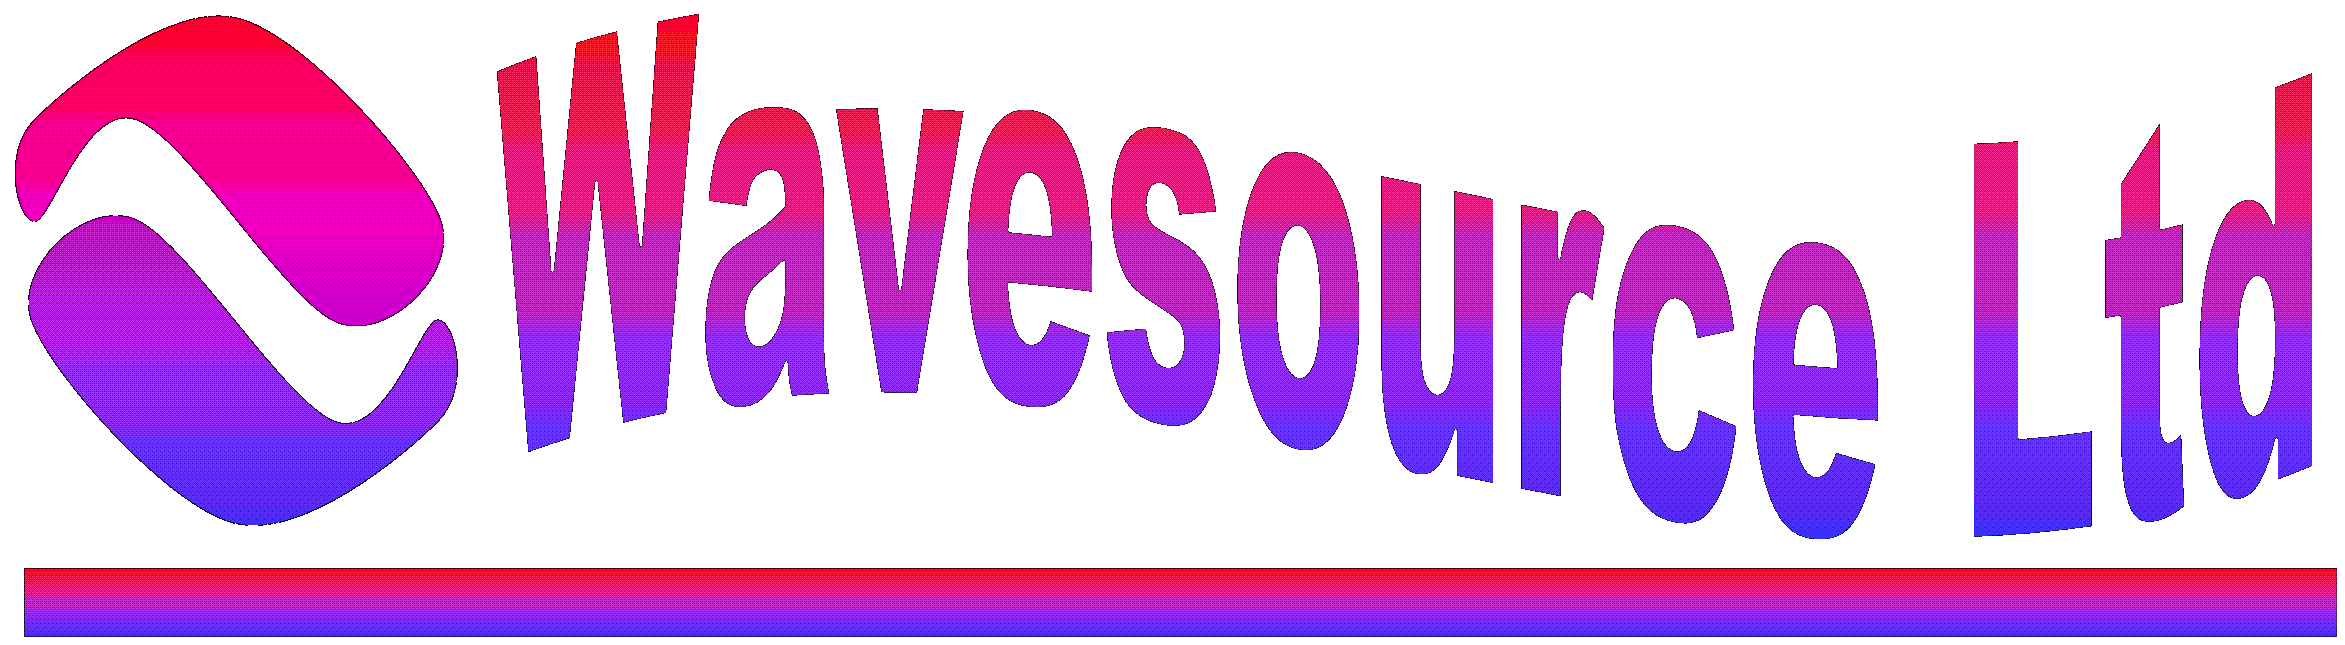 Wavesource Ltd Logo